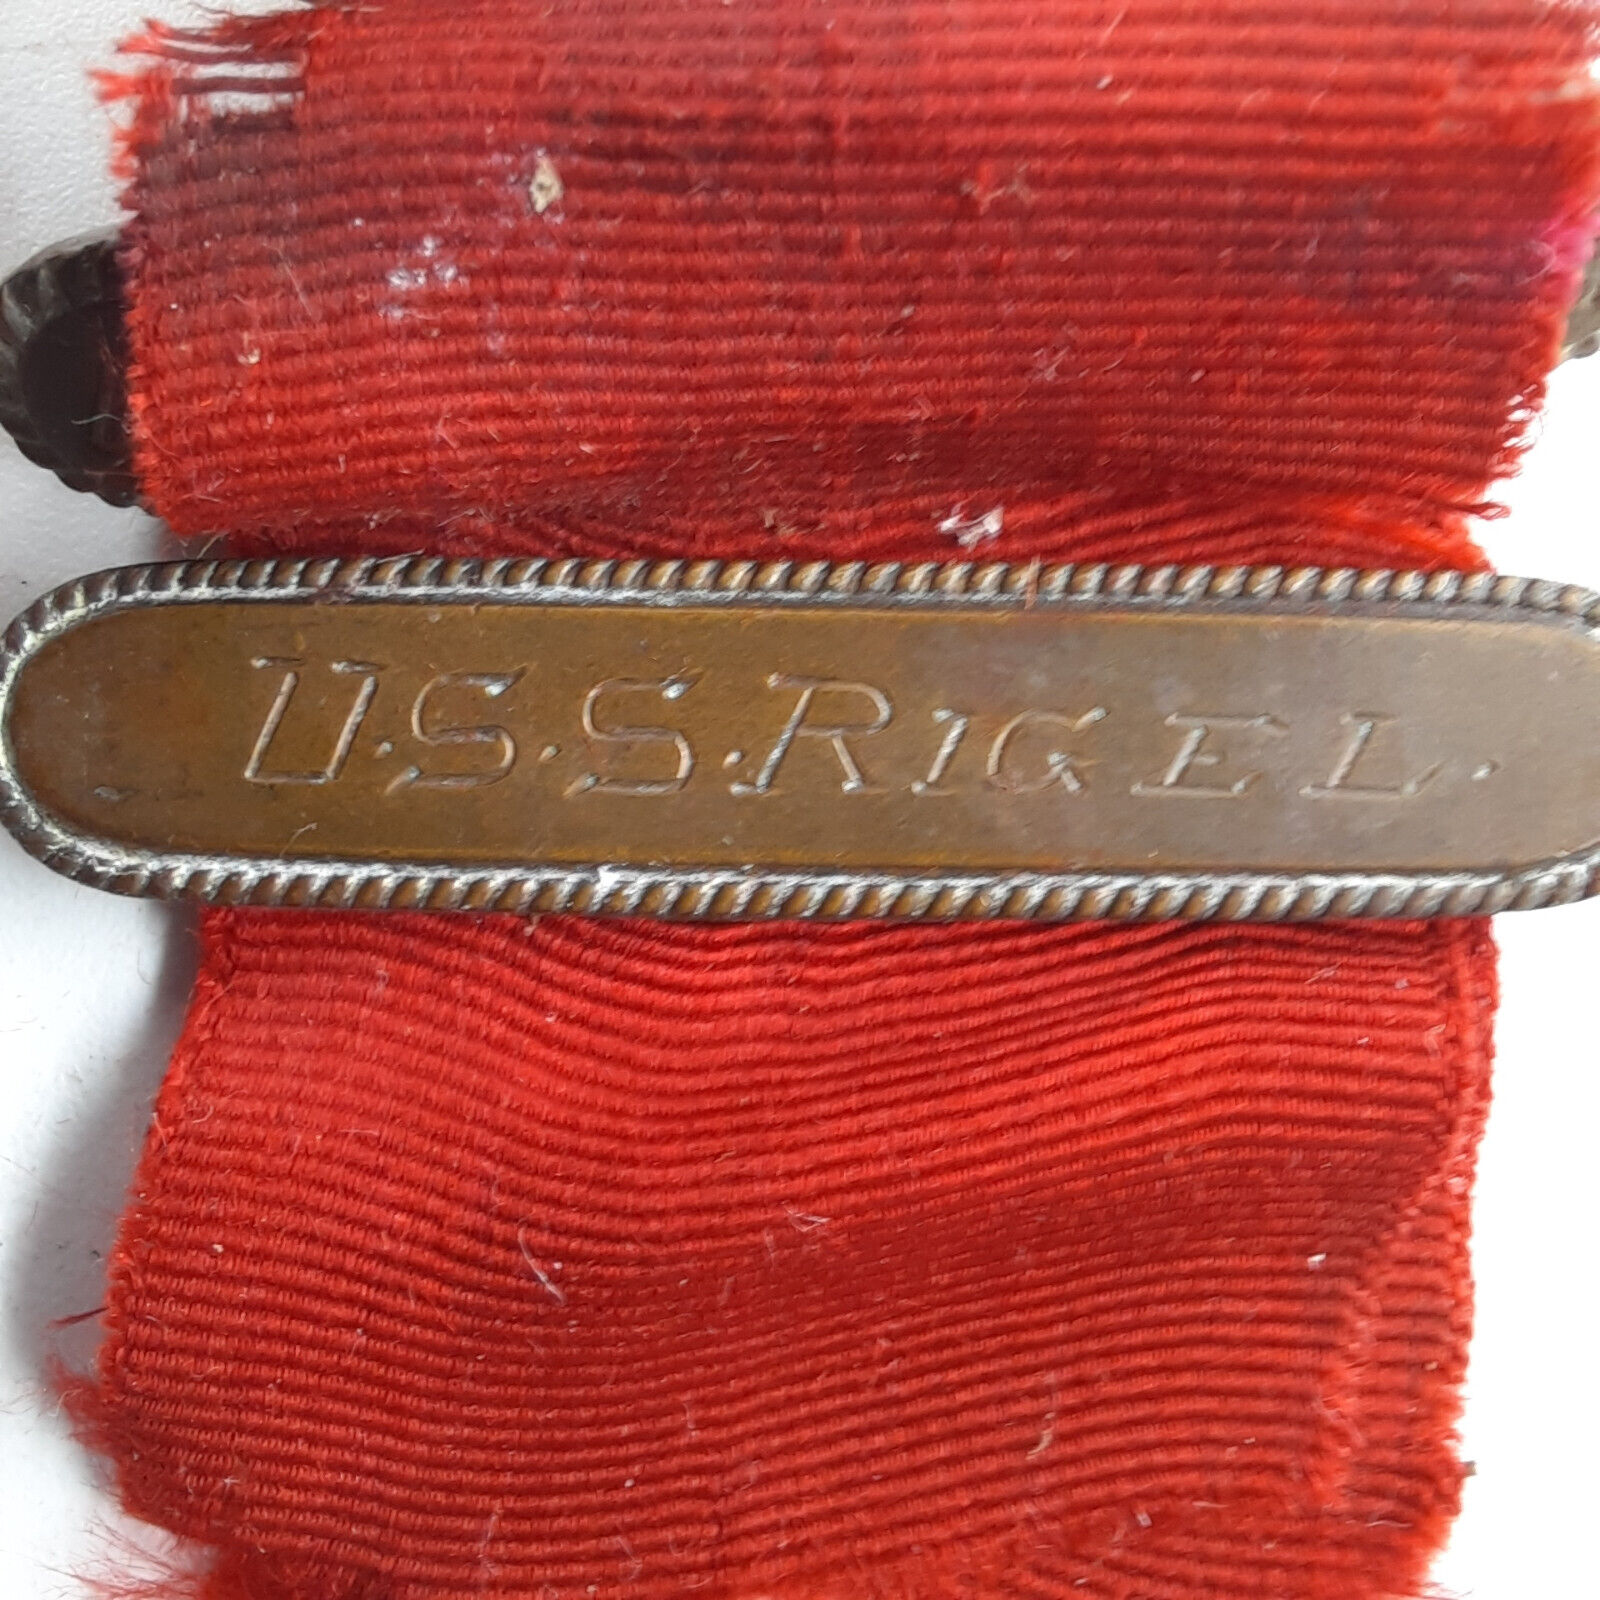 WW 2 Collar Tab Inscribed May 23 1924 Uniform Patch Antique Military RARE EUC